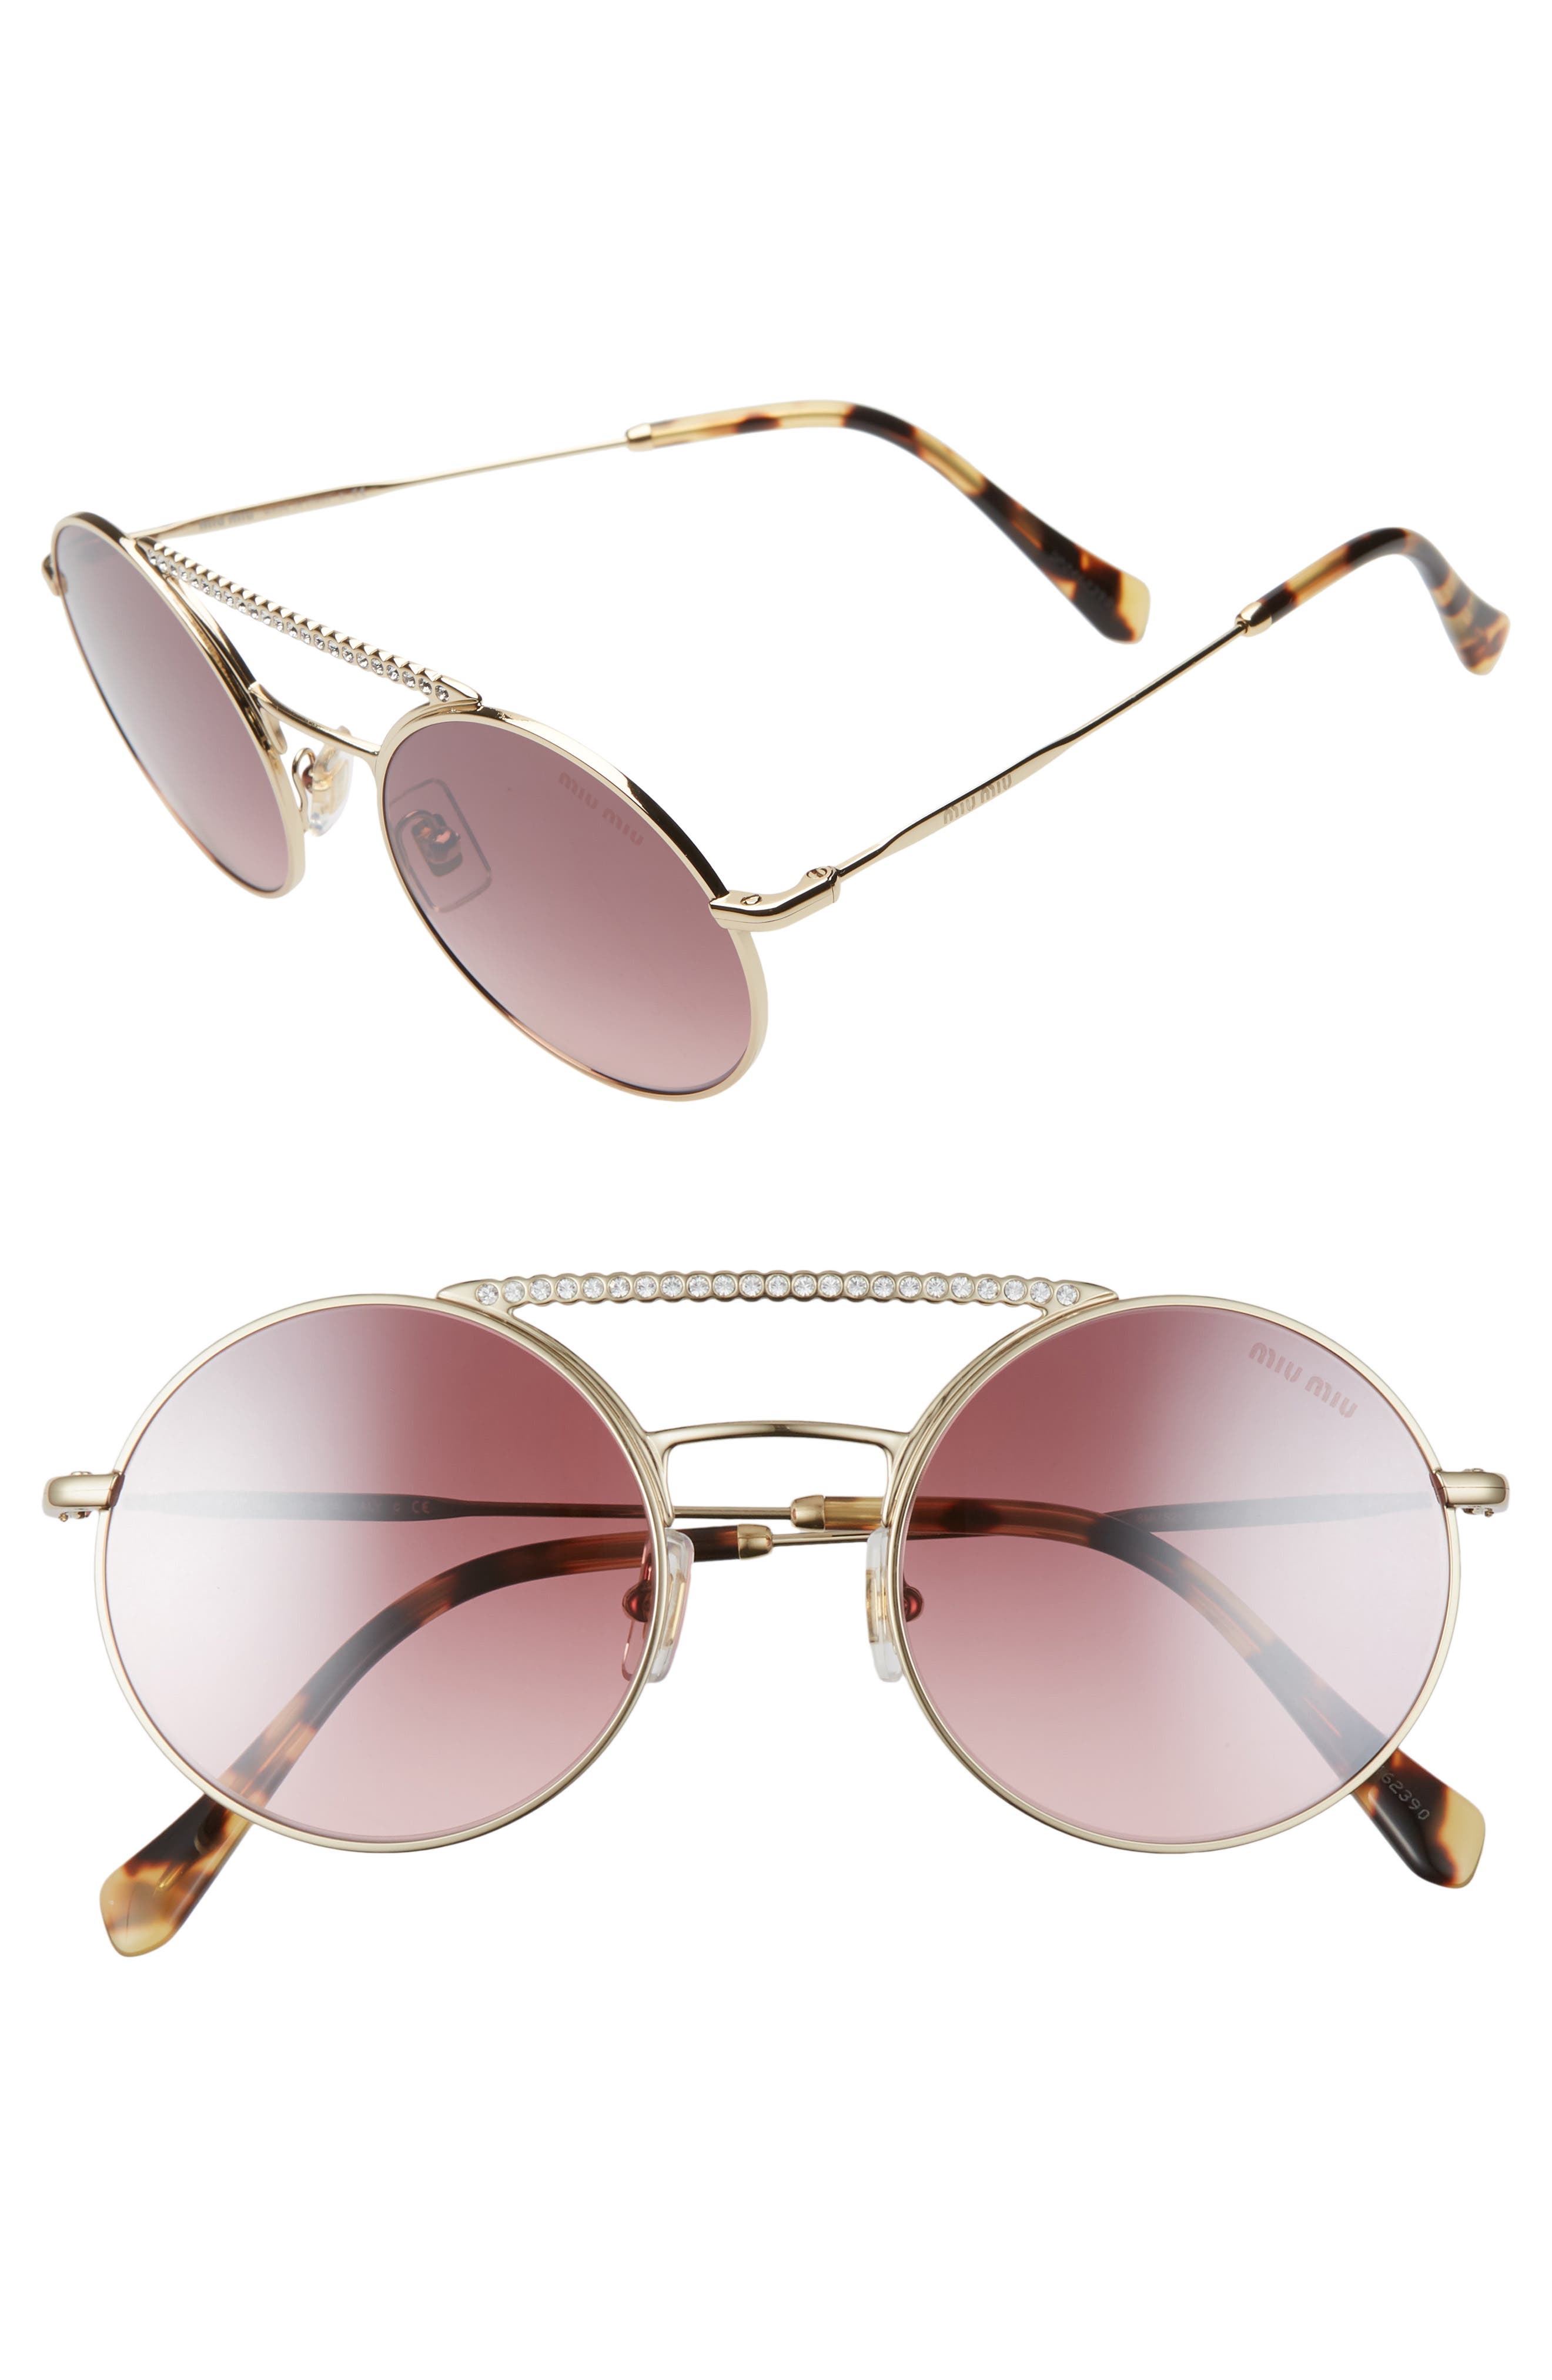 Anne et Valentin Round Sunglasses lilac-cream color gradient casual look Accessories Sunglasses Round Sunglasses 